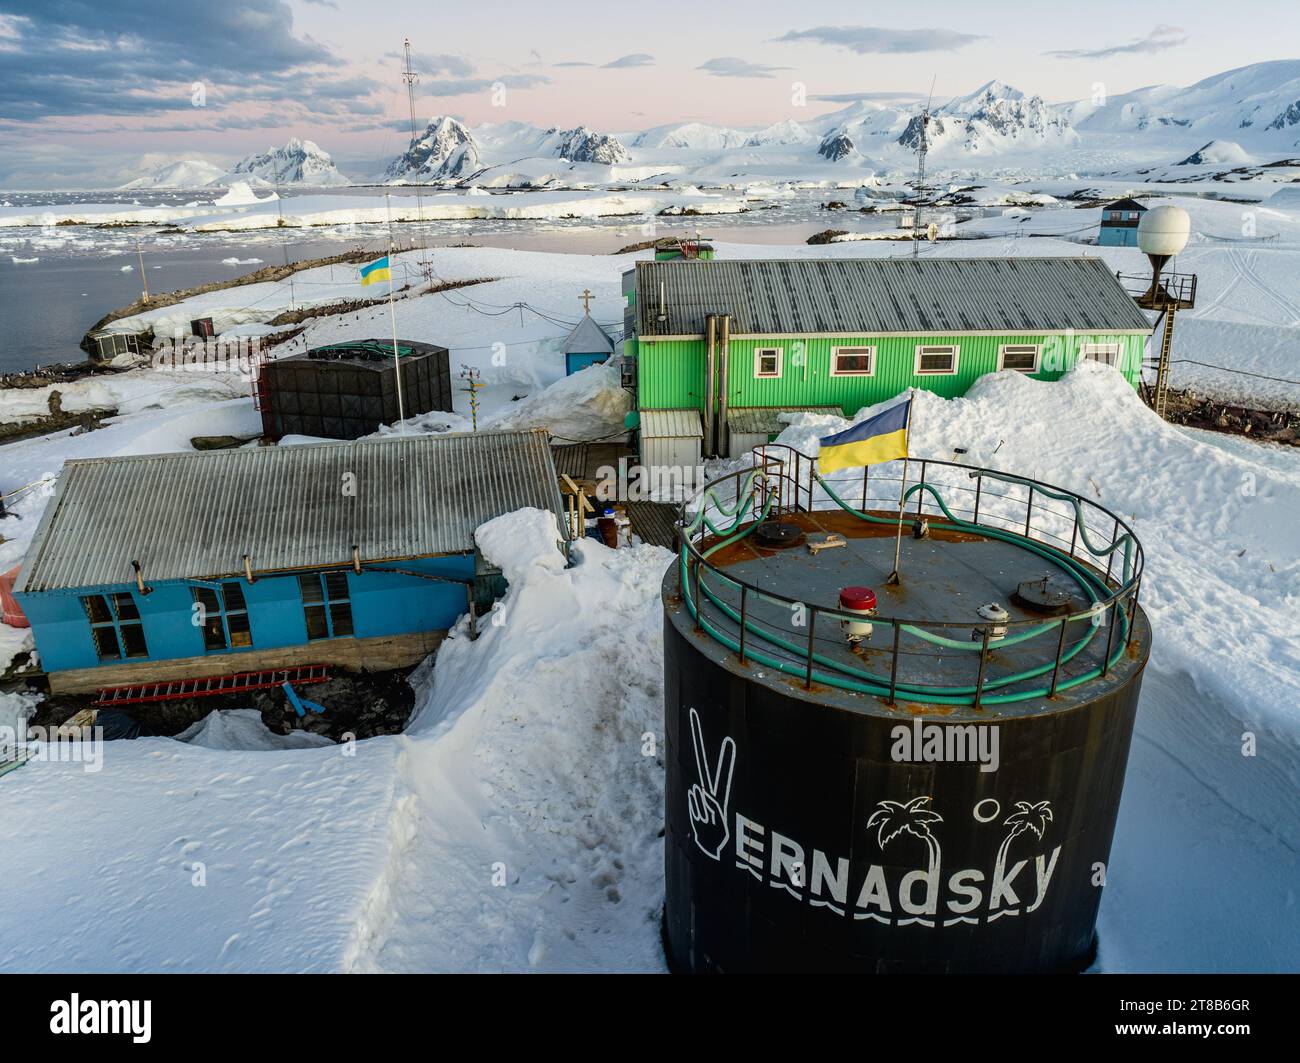 Base di ricerca Ucraina Vernadsky sull'isola di Galindez nelle Isole argentine, Antartide Foto Stock